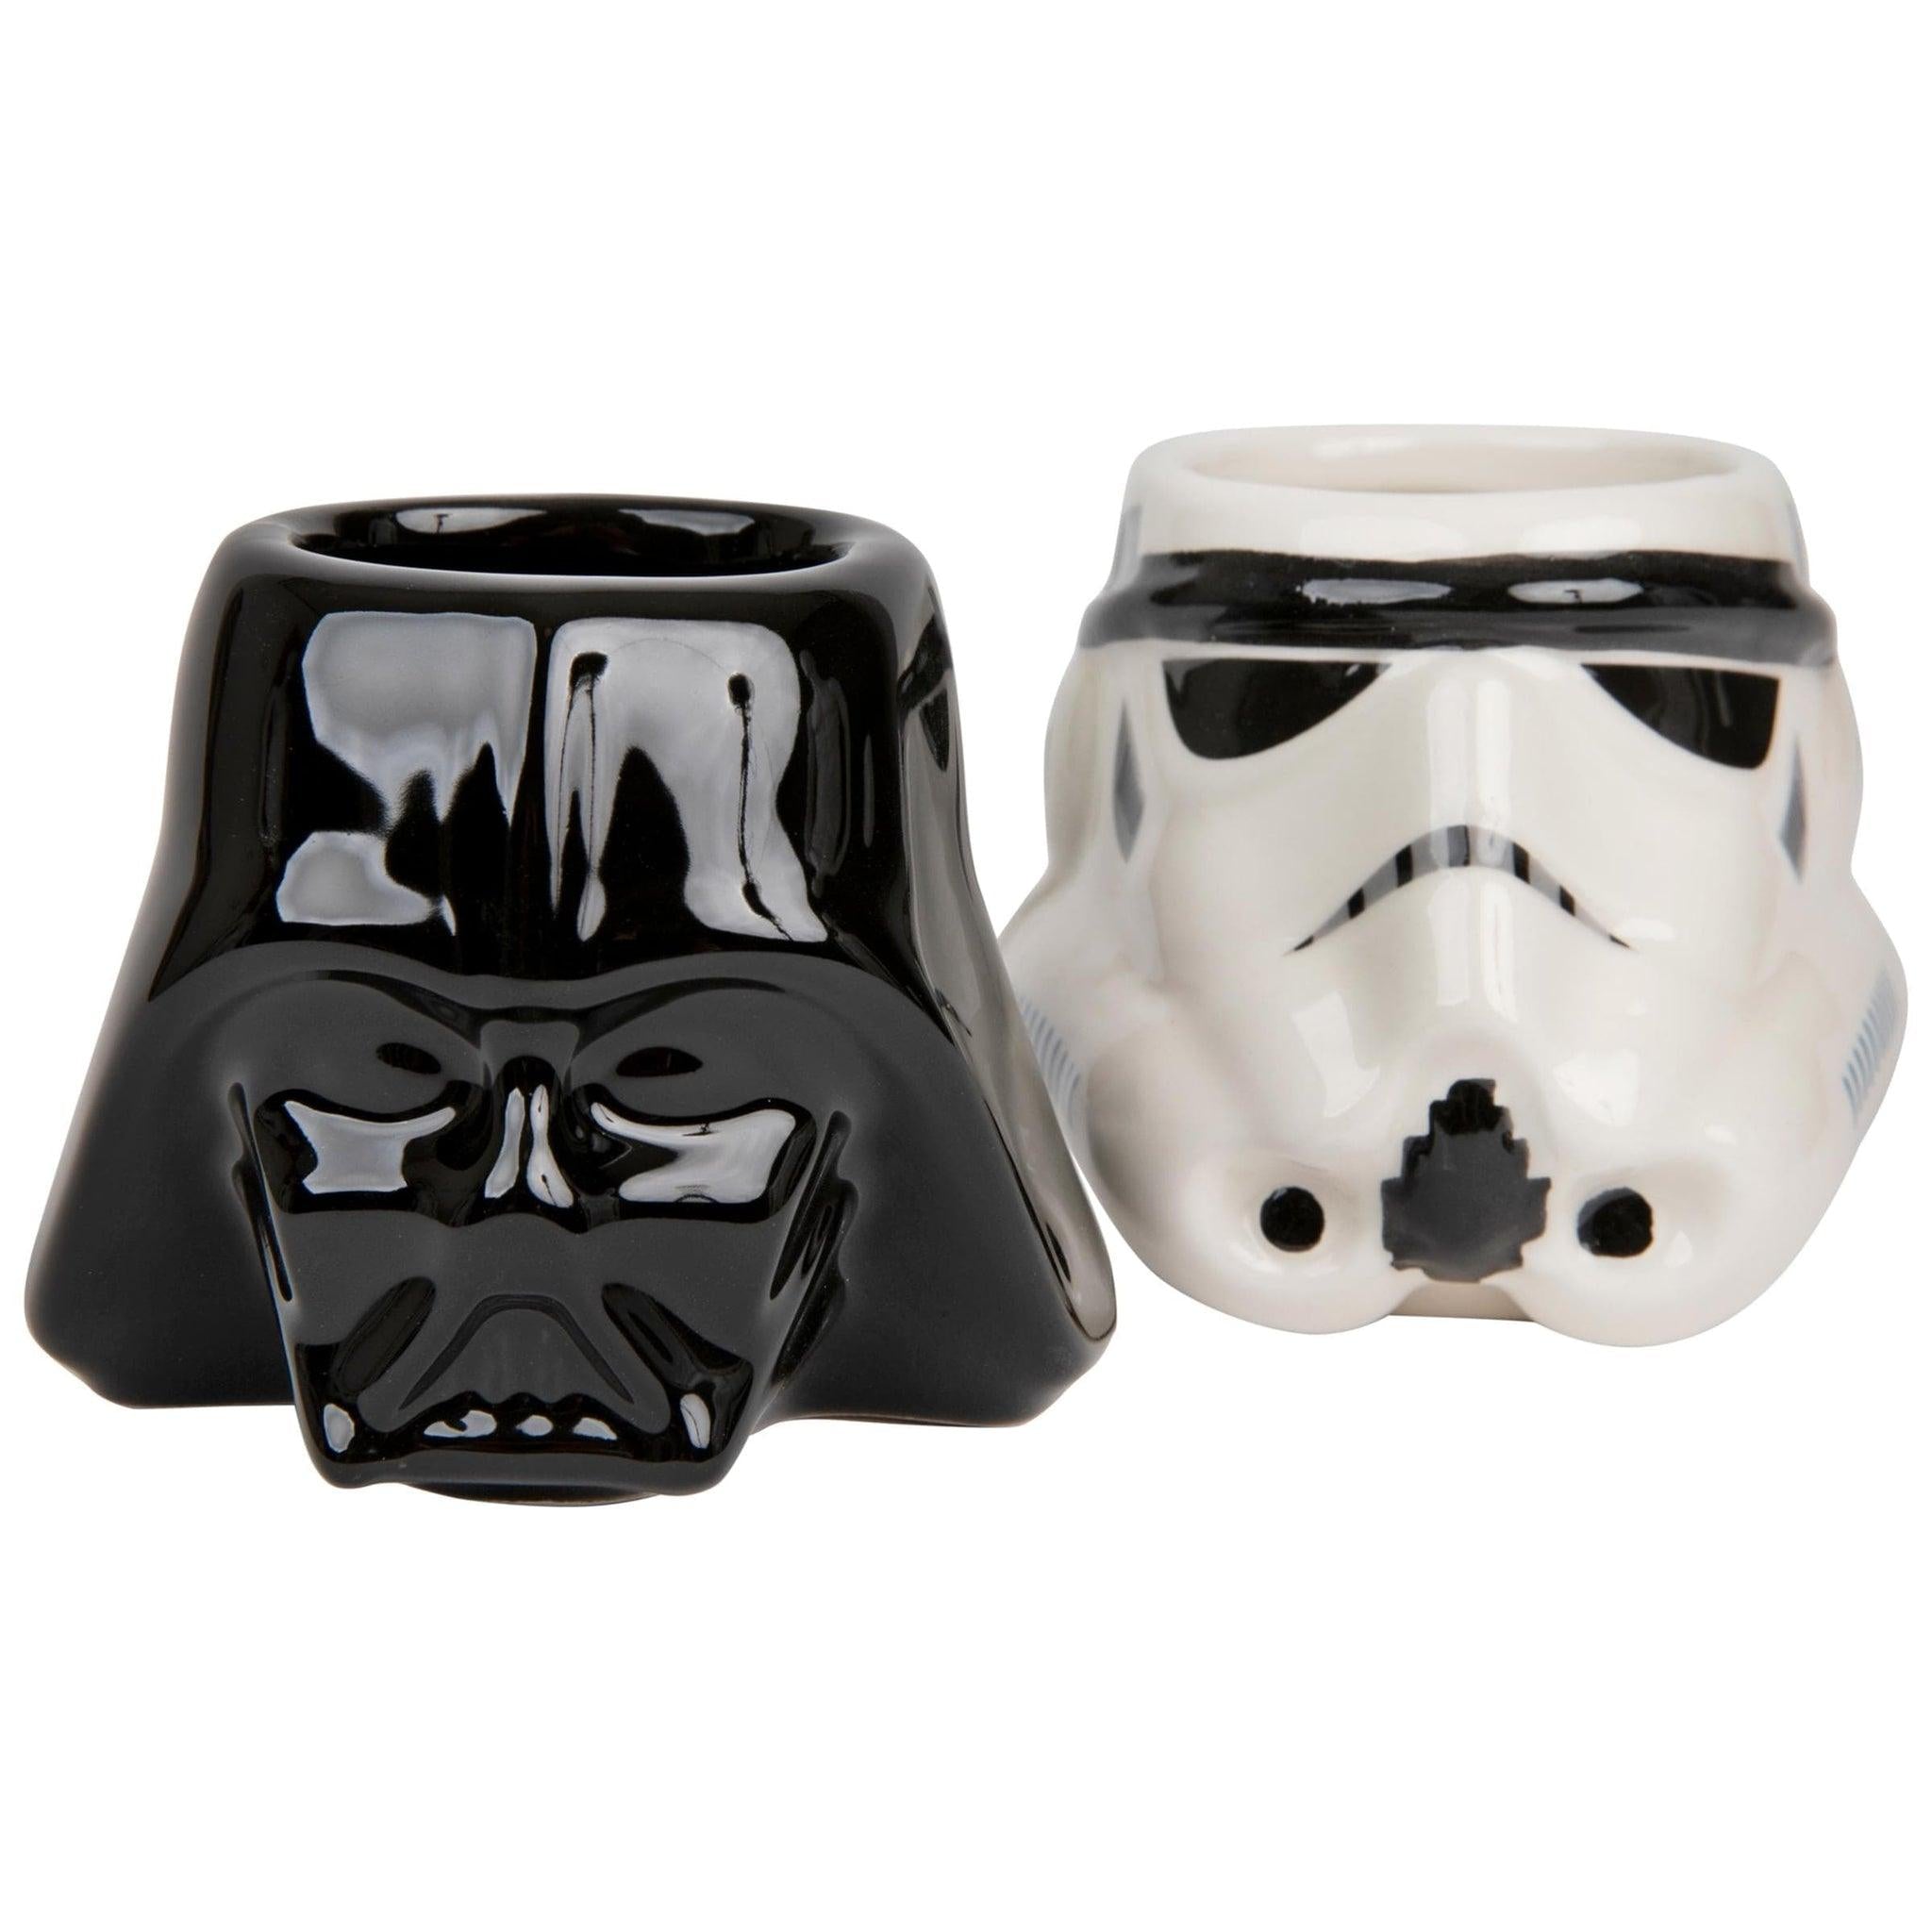 Retro Vintage Star Wars Darth Vader Head Comic Mug Star Wars Mug